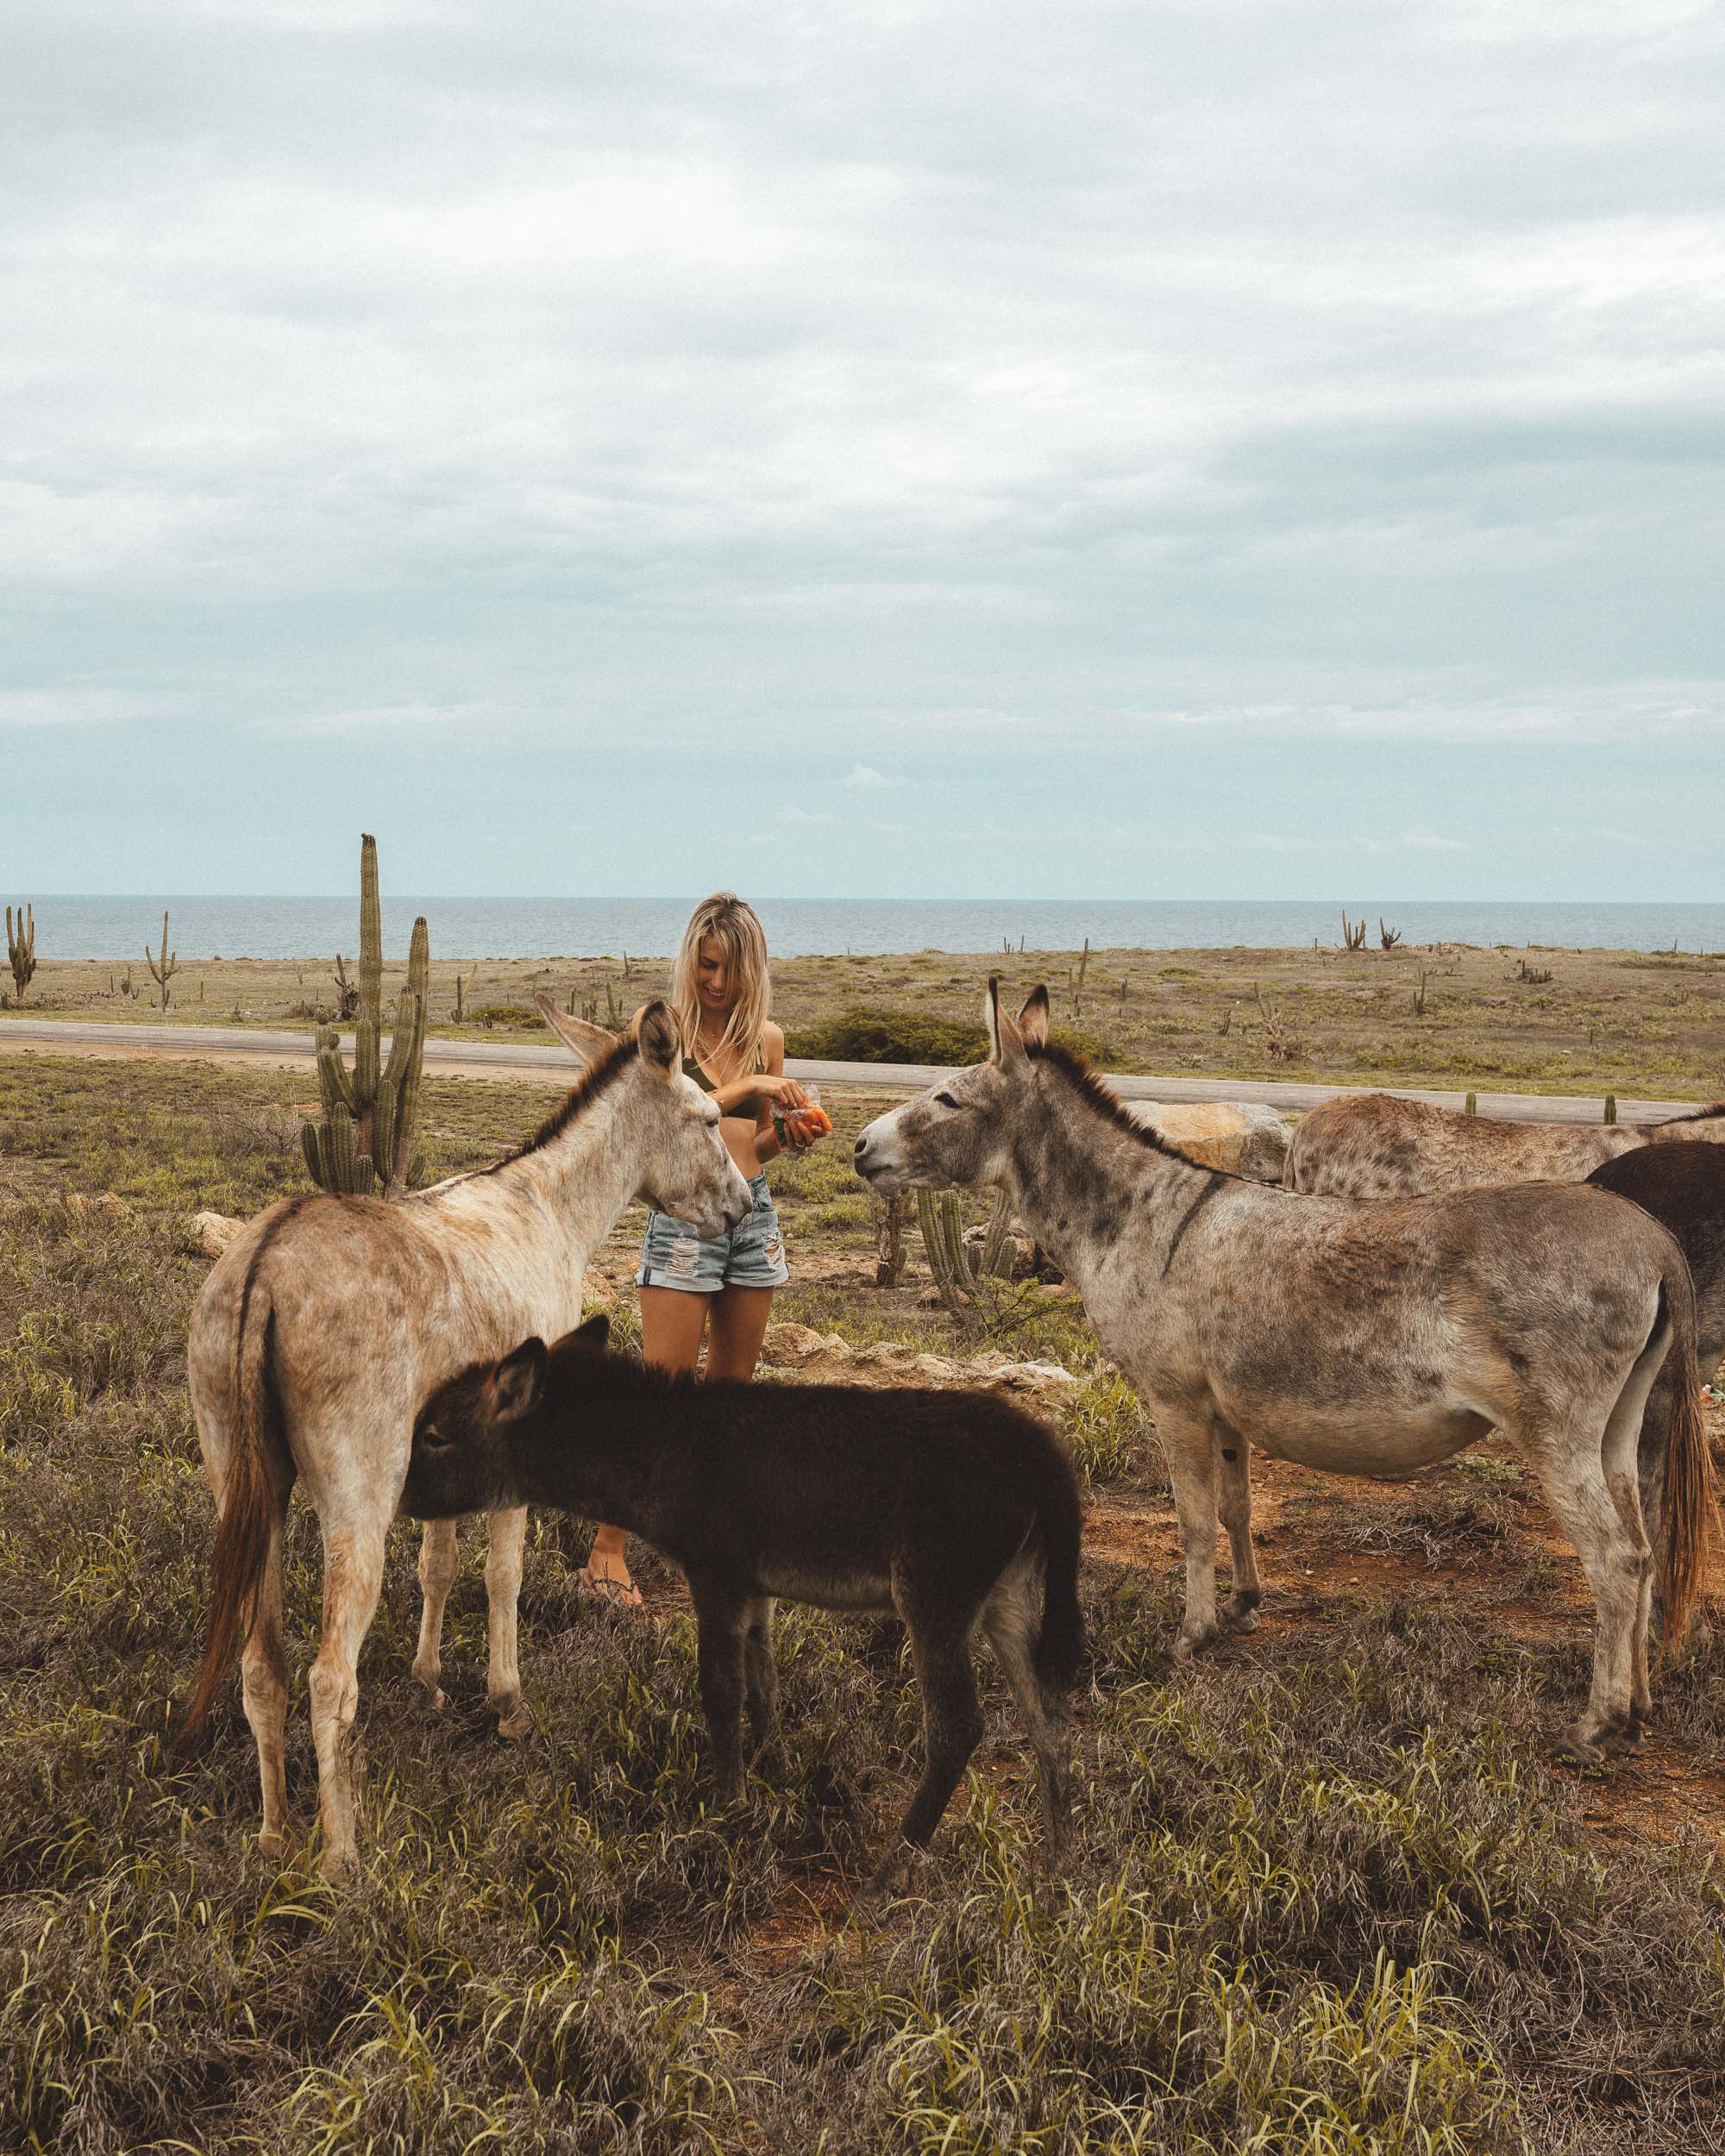 Feeding the donkeys in Aruba island via Find Us Lost